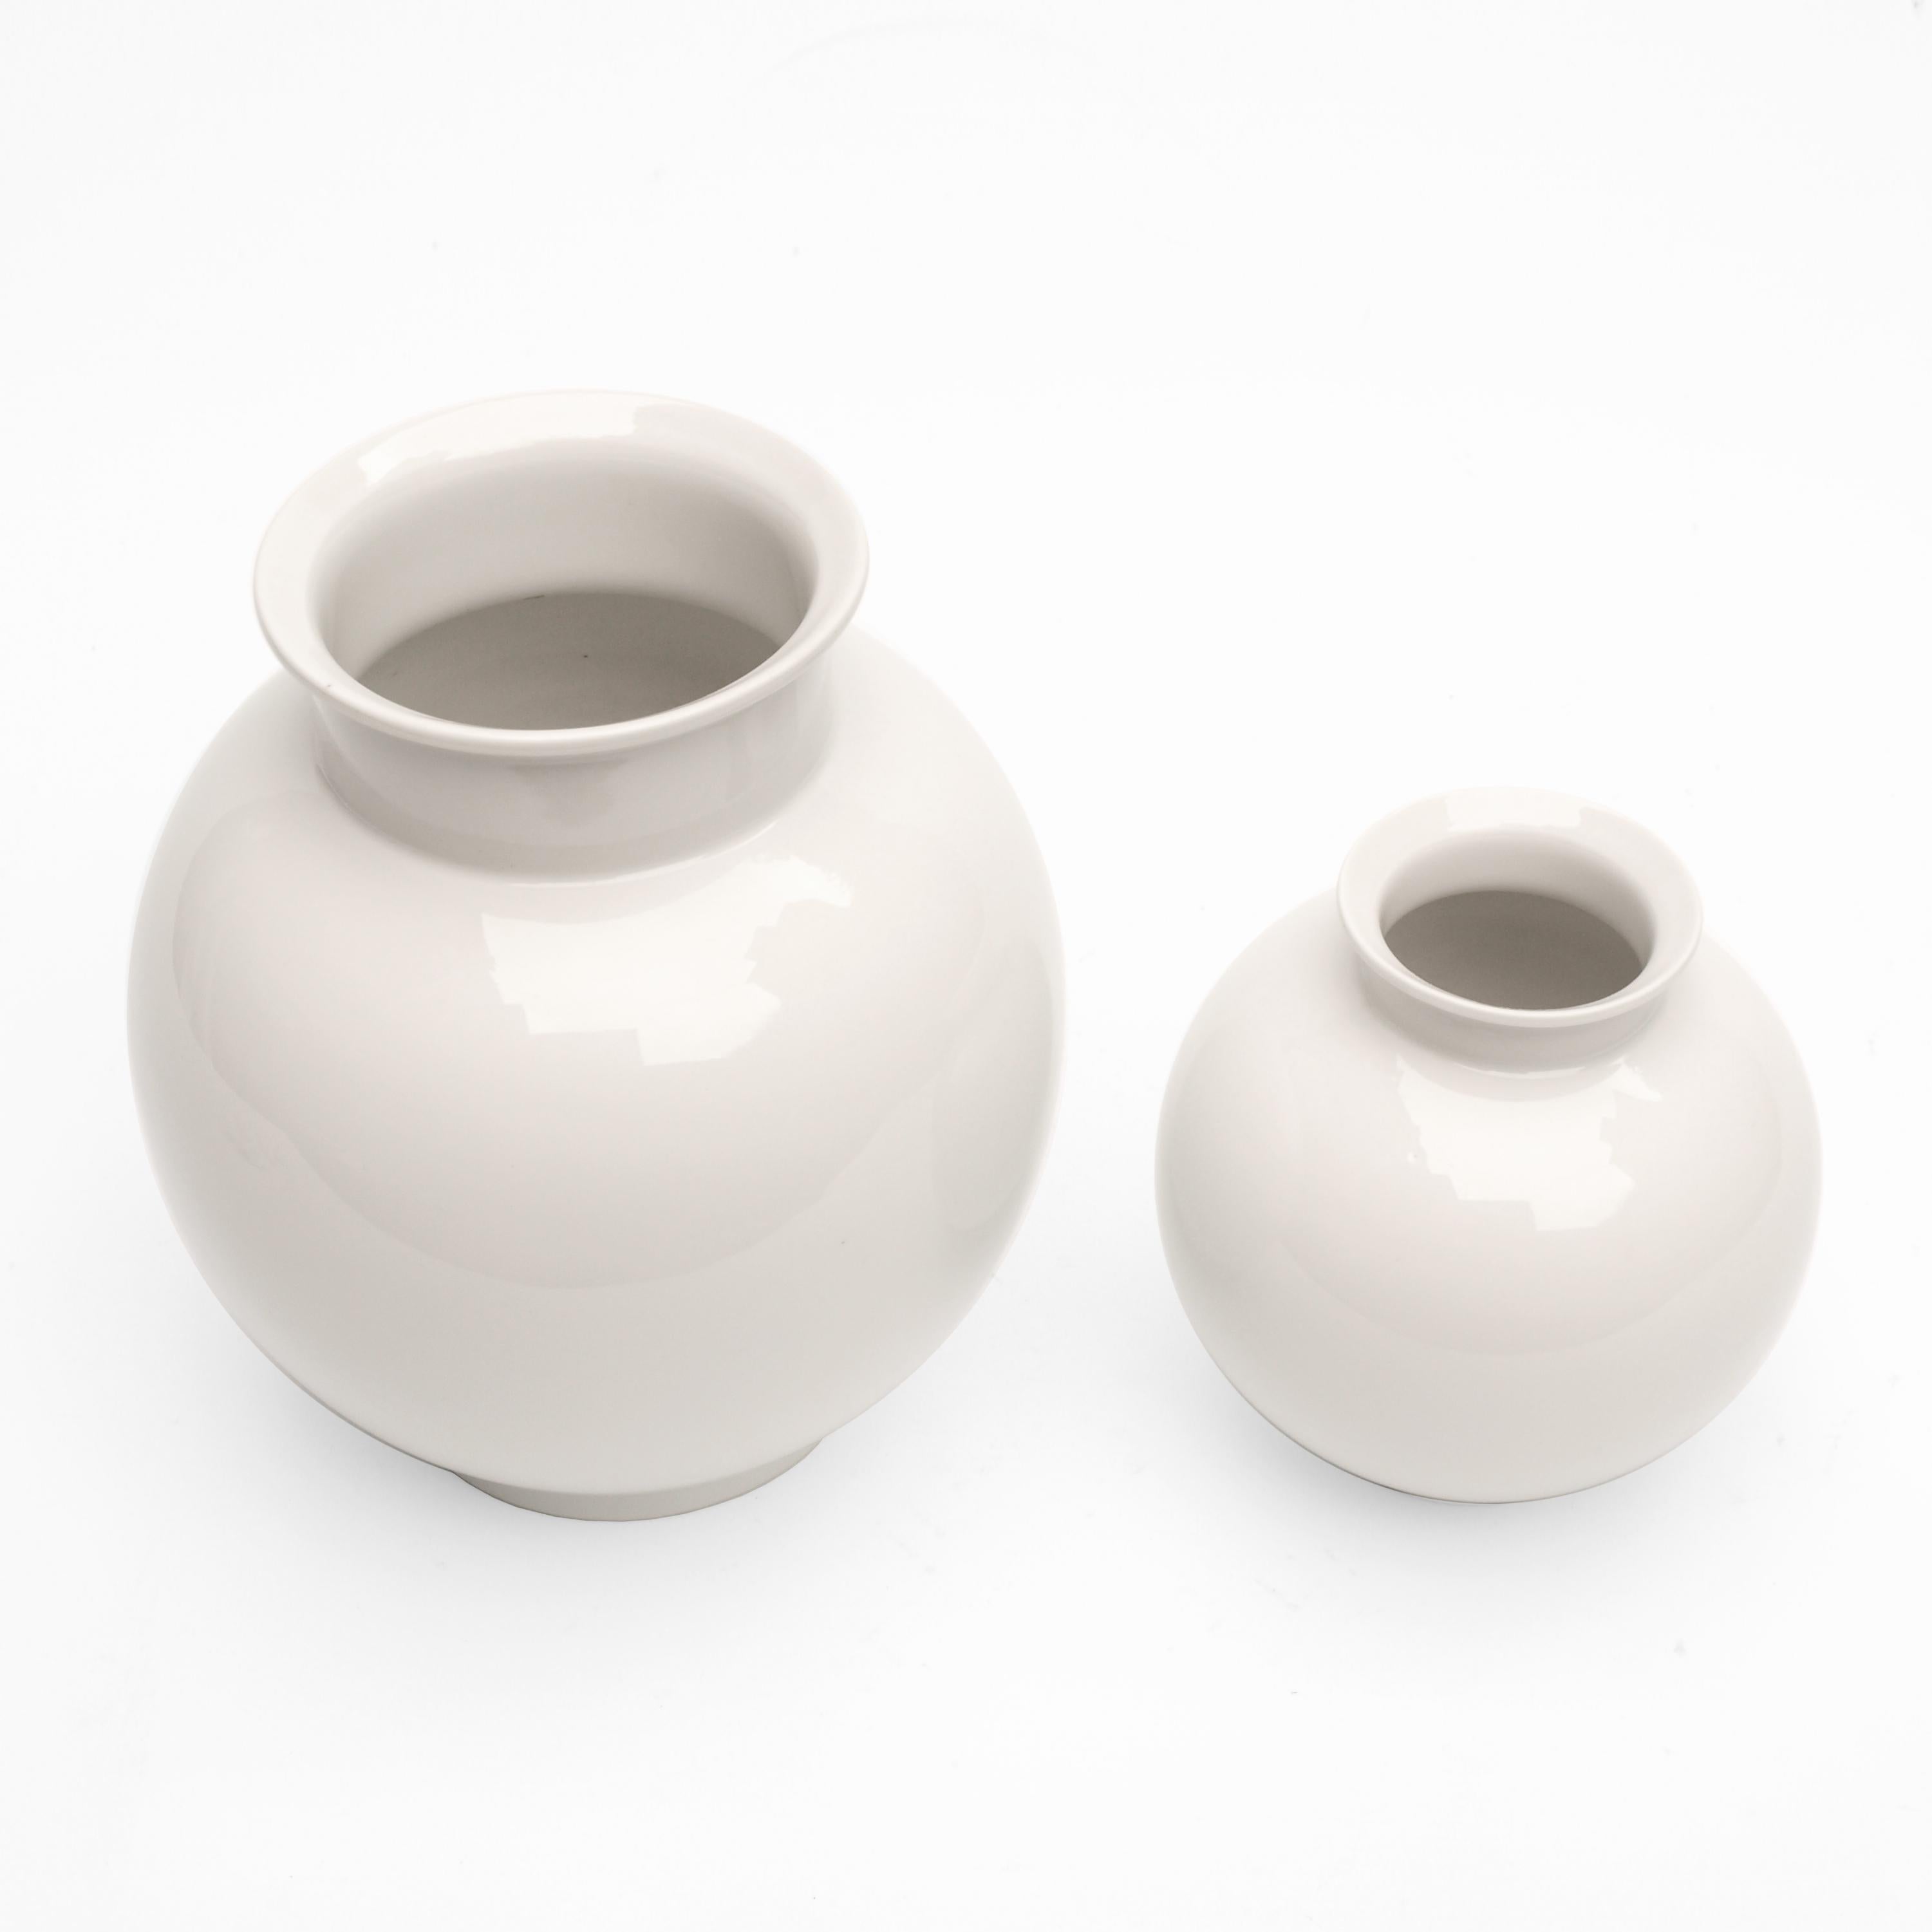 Pair of Porcelain Flower Vases by Thomas 1